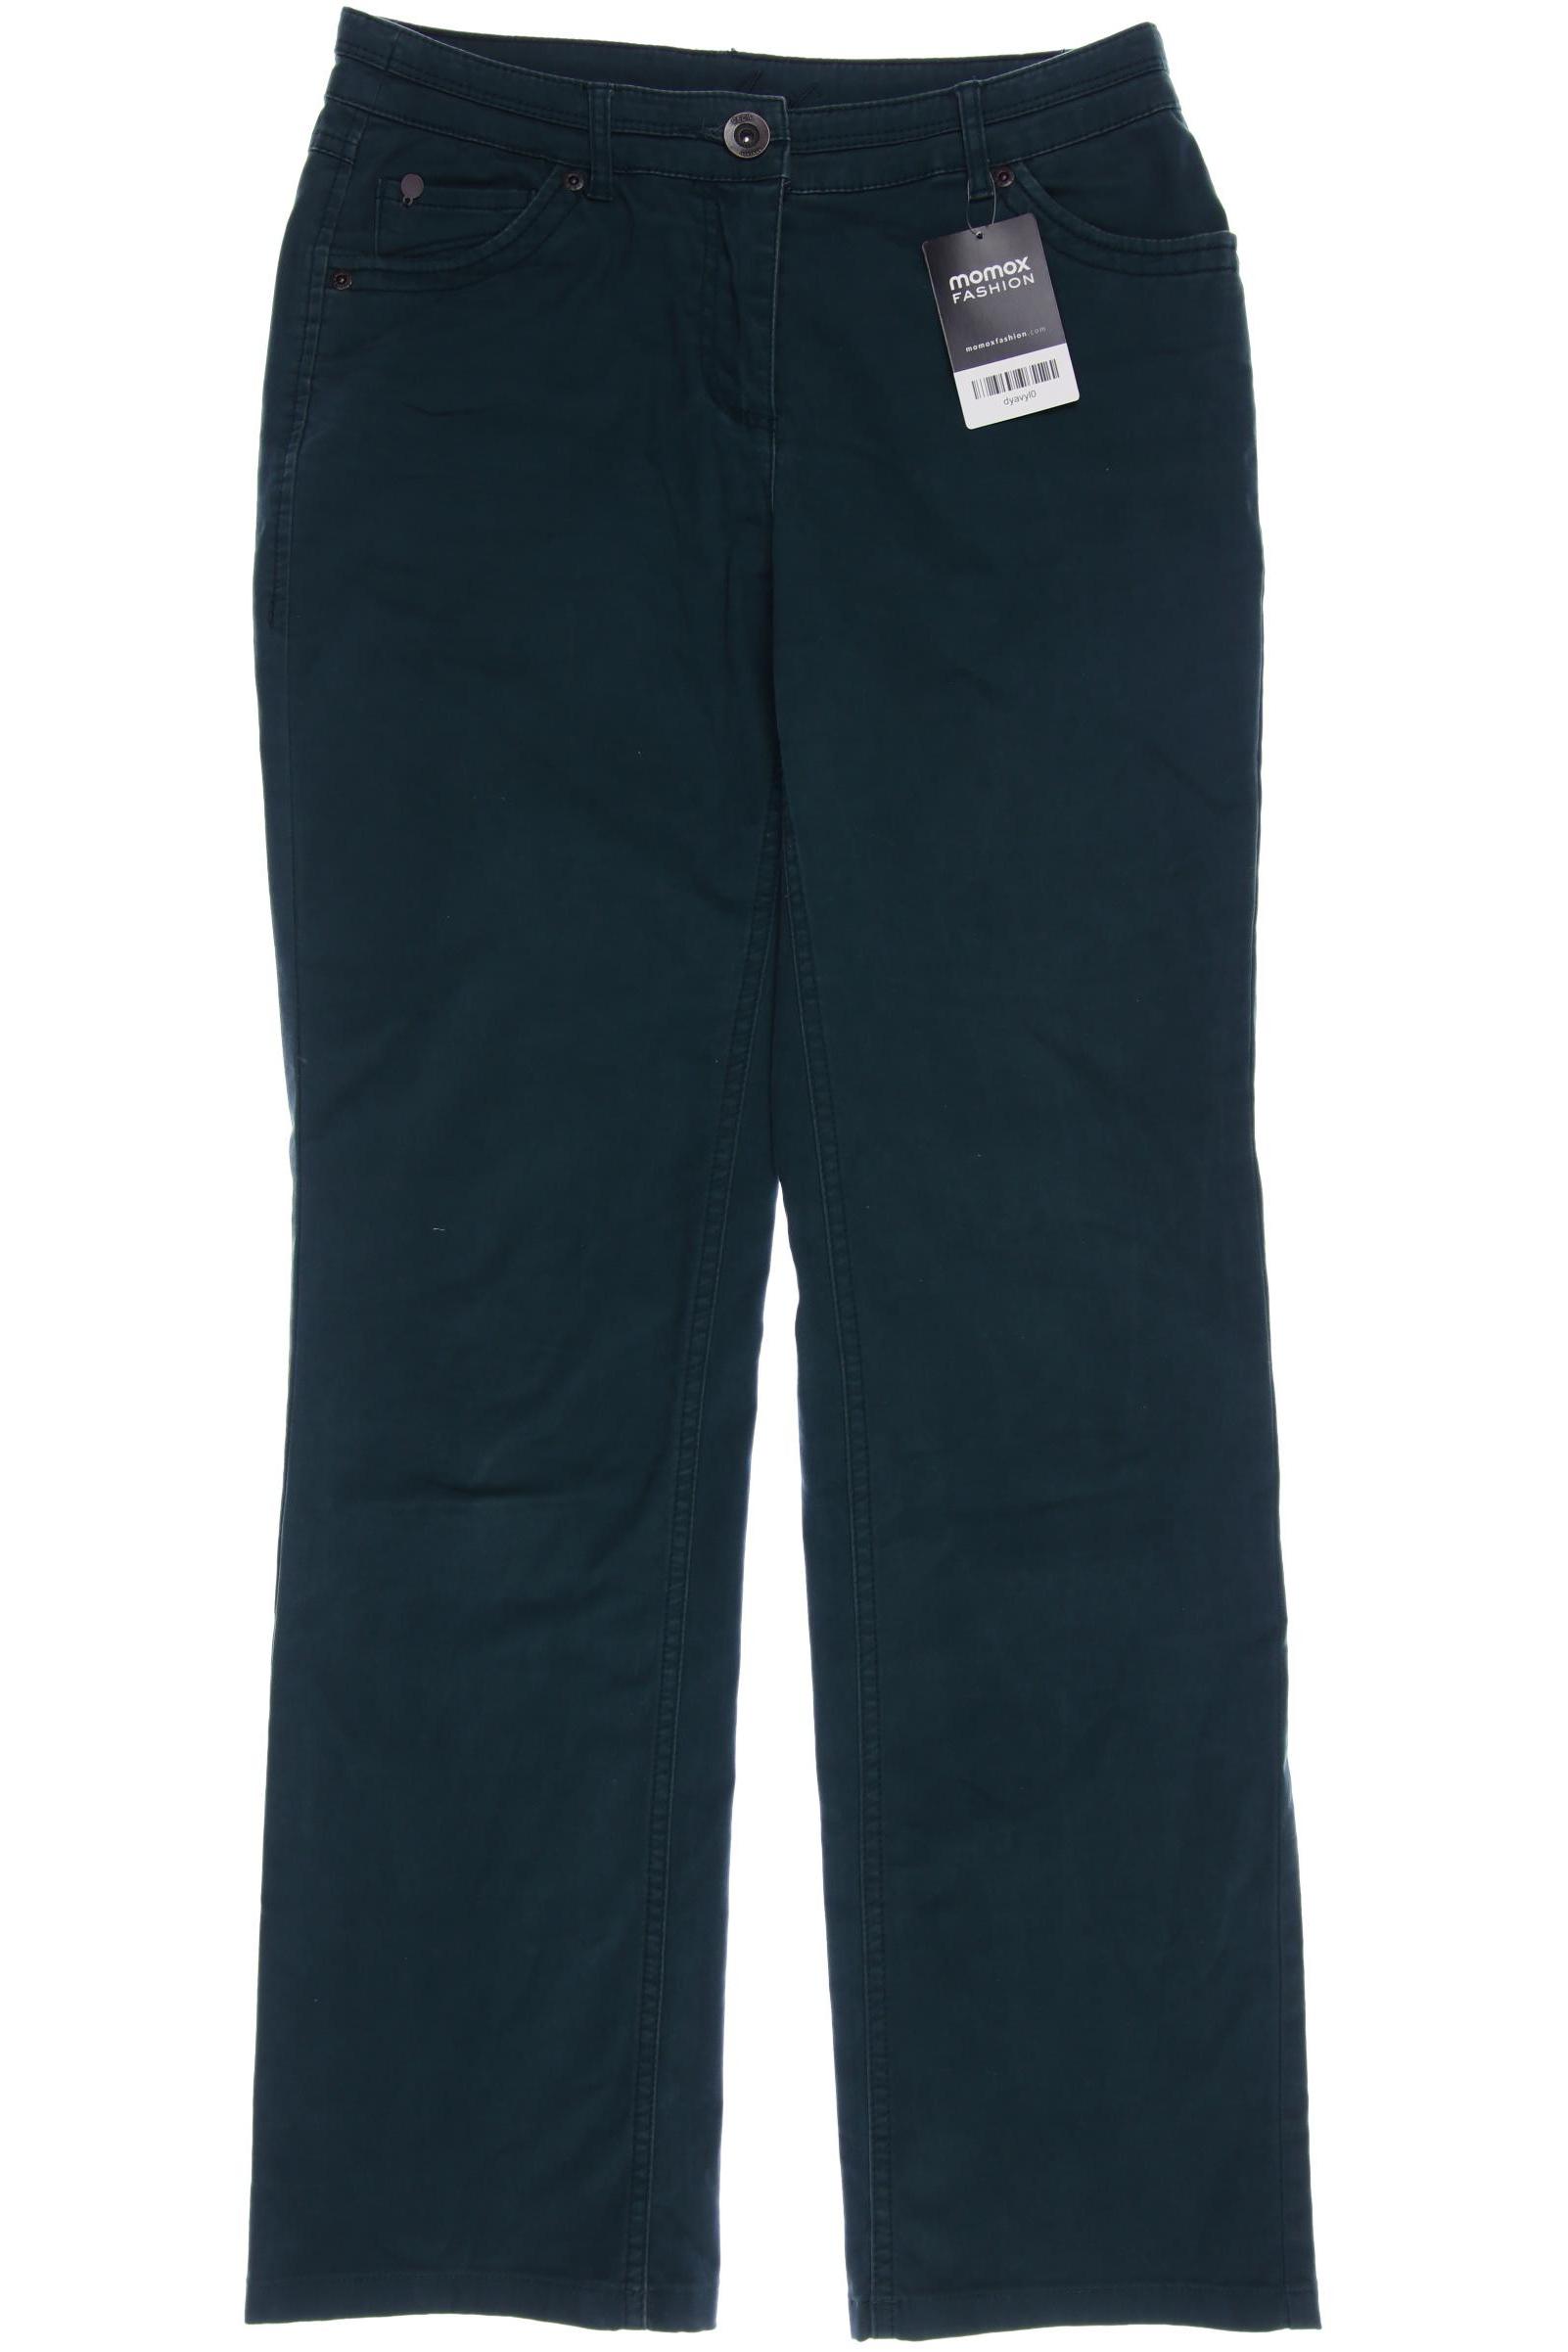 Cecil Damen Jeans, grün, Gr. 38 von cecil